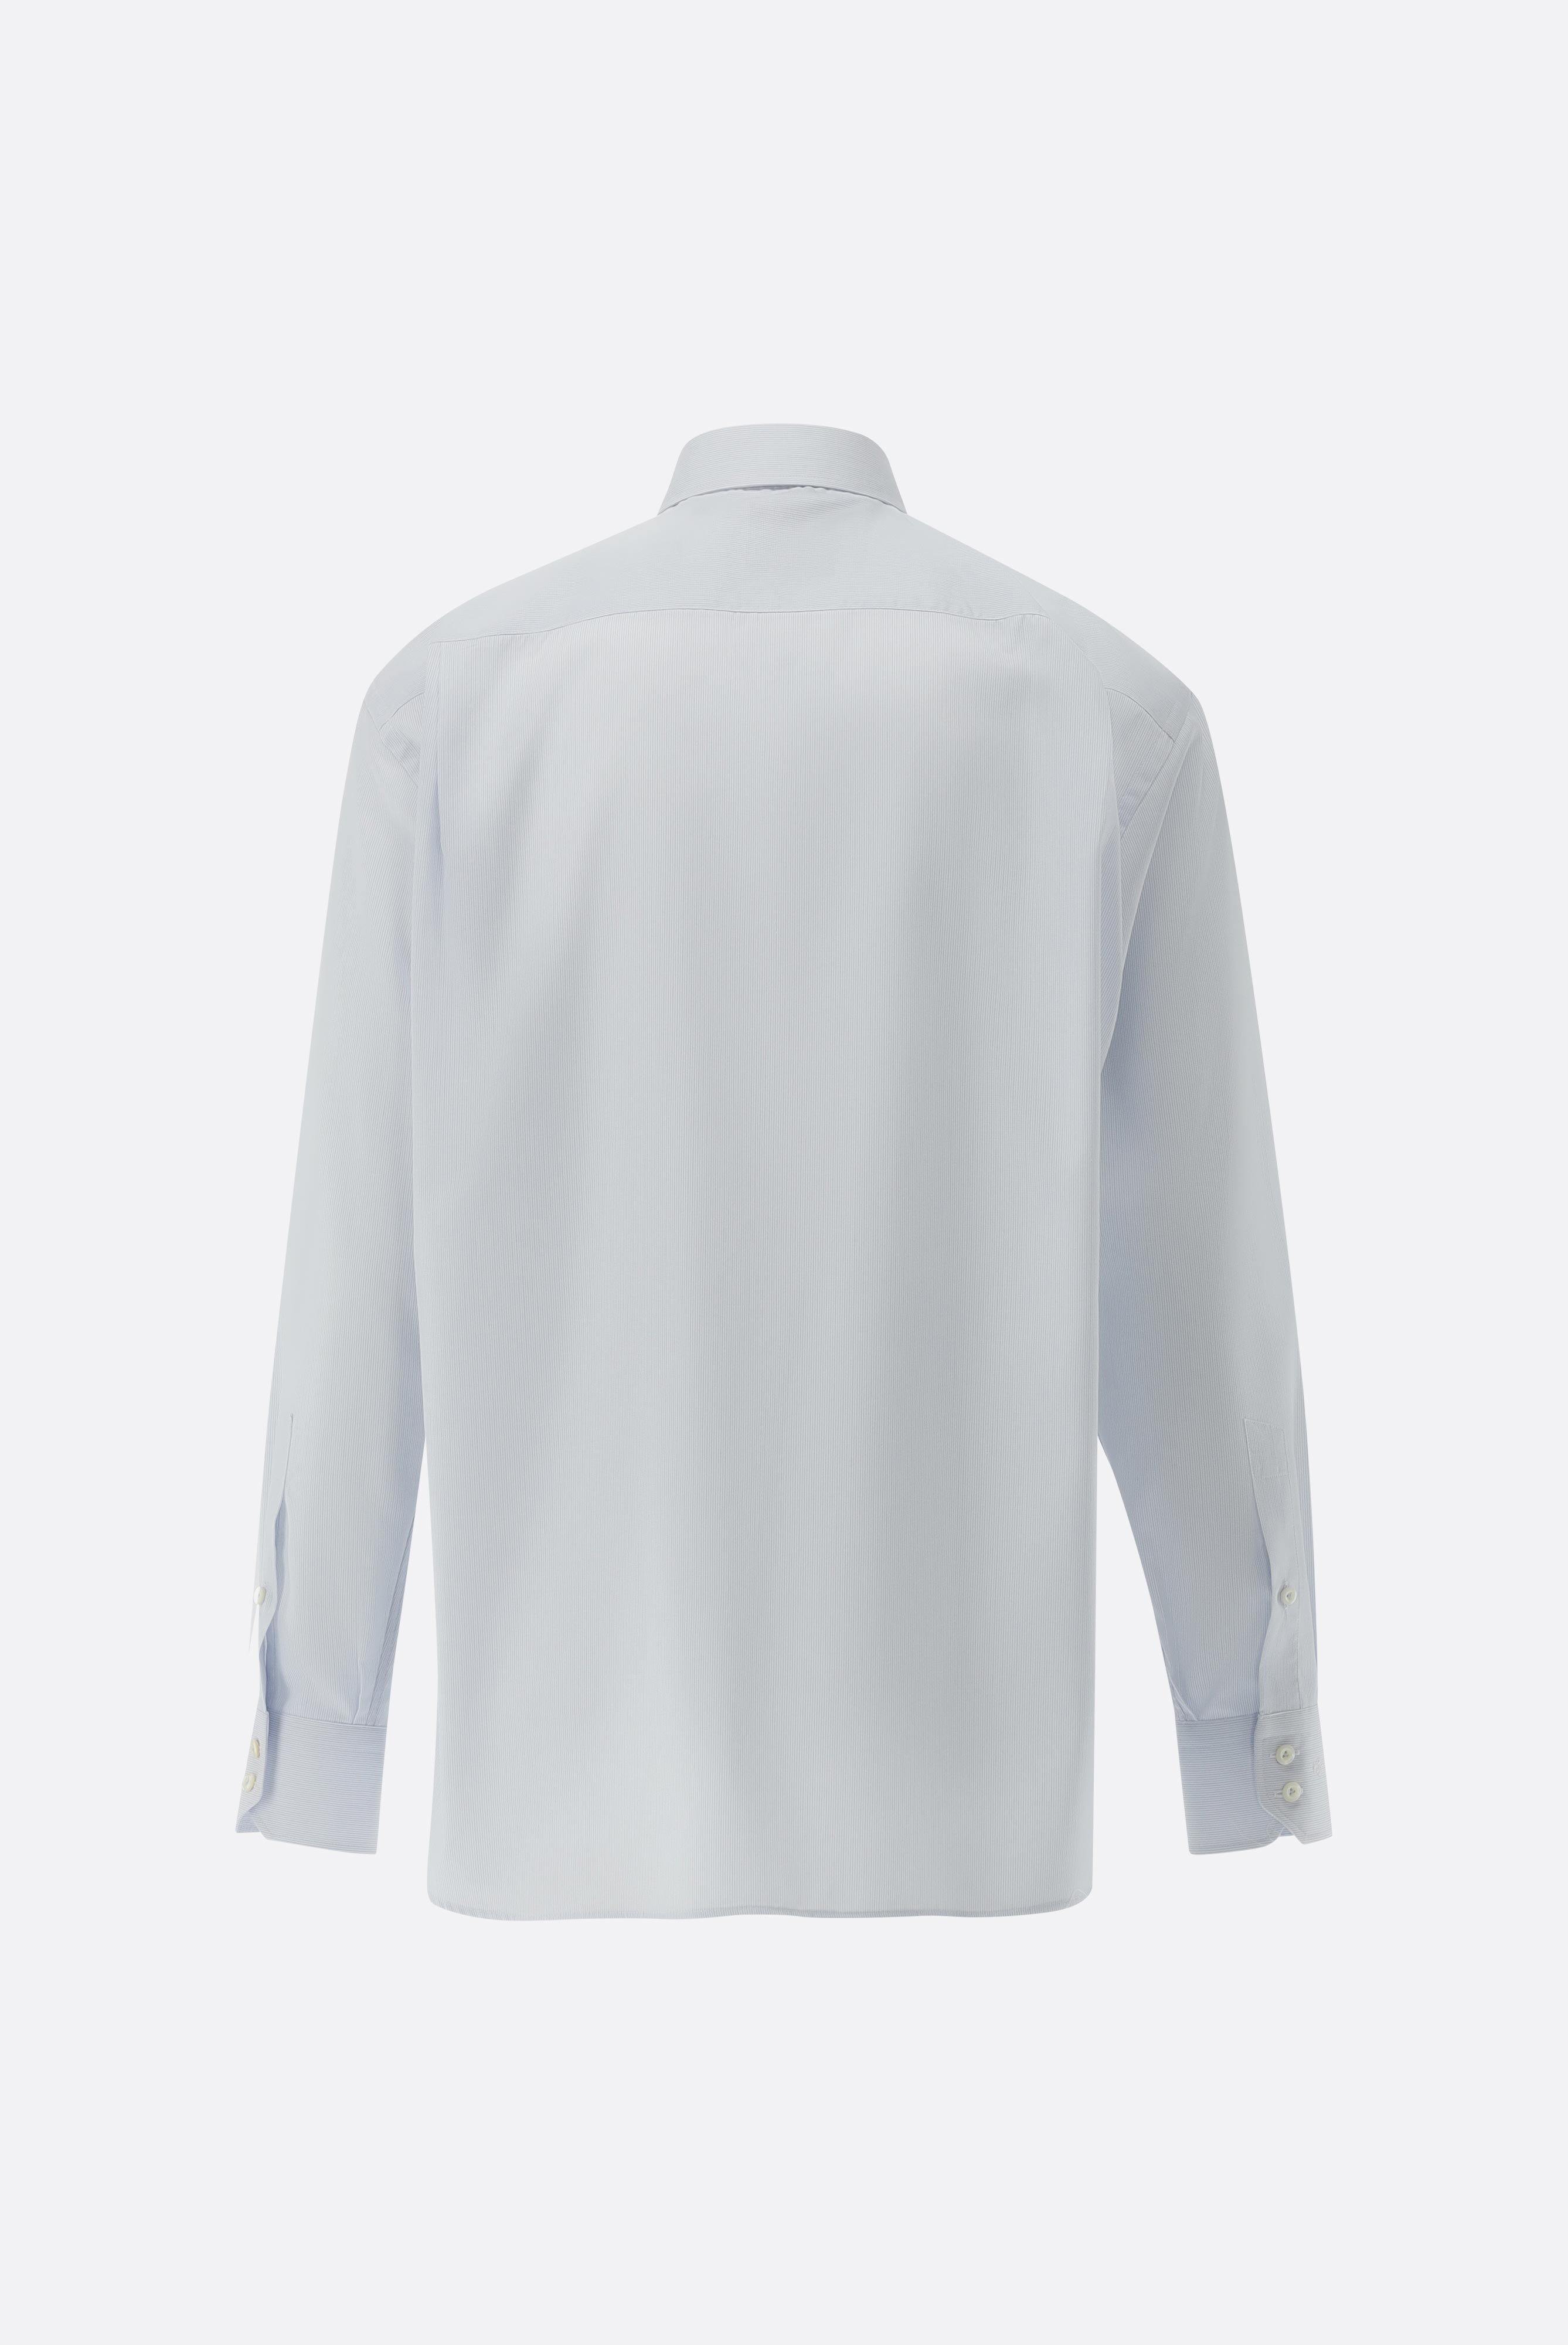 Bügelleichte Hemden+Bügelfreies Businesshemd Comfort Fit+20.2026.BQ.162611.720.39